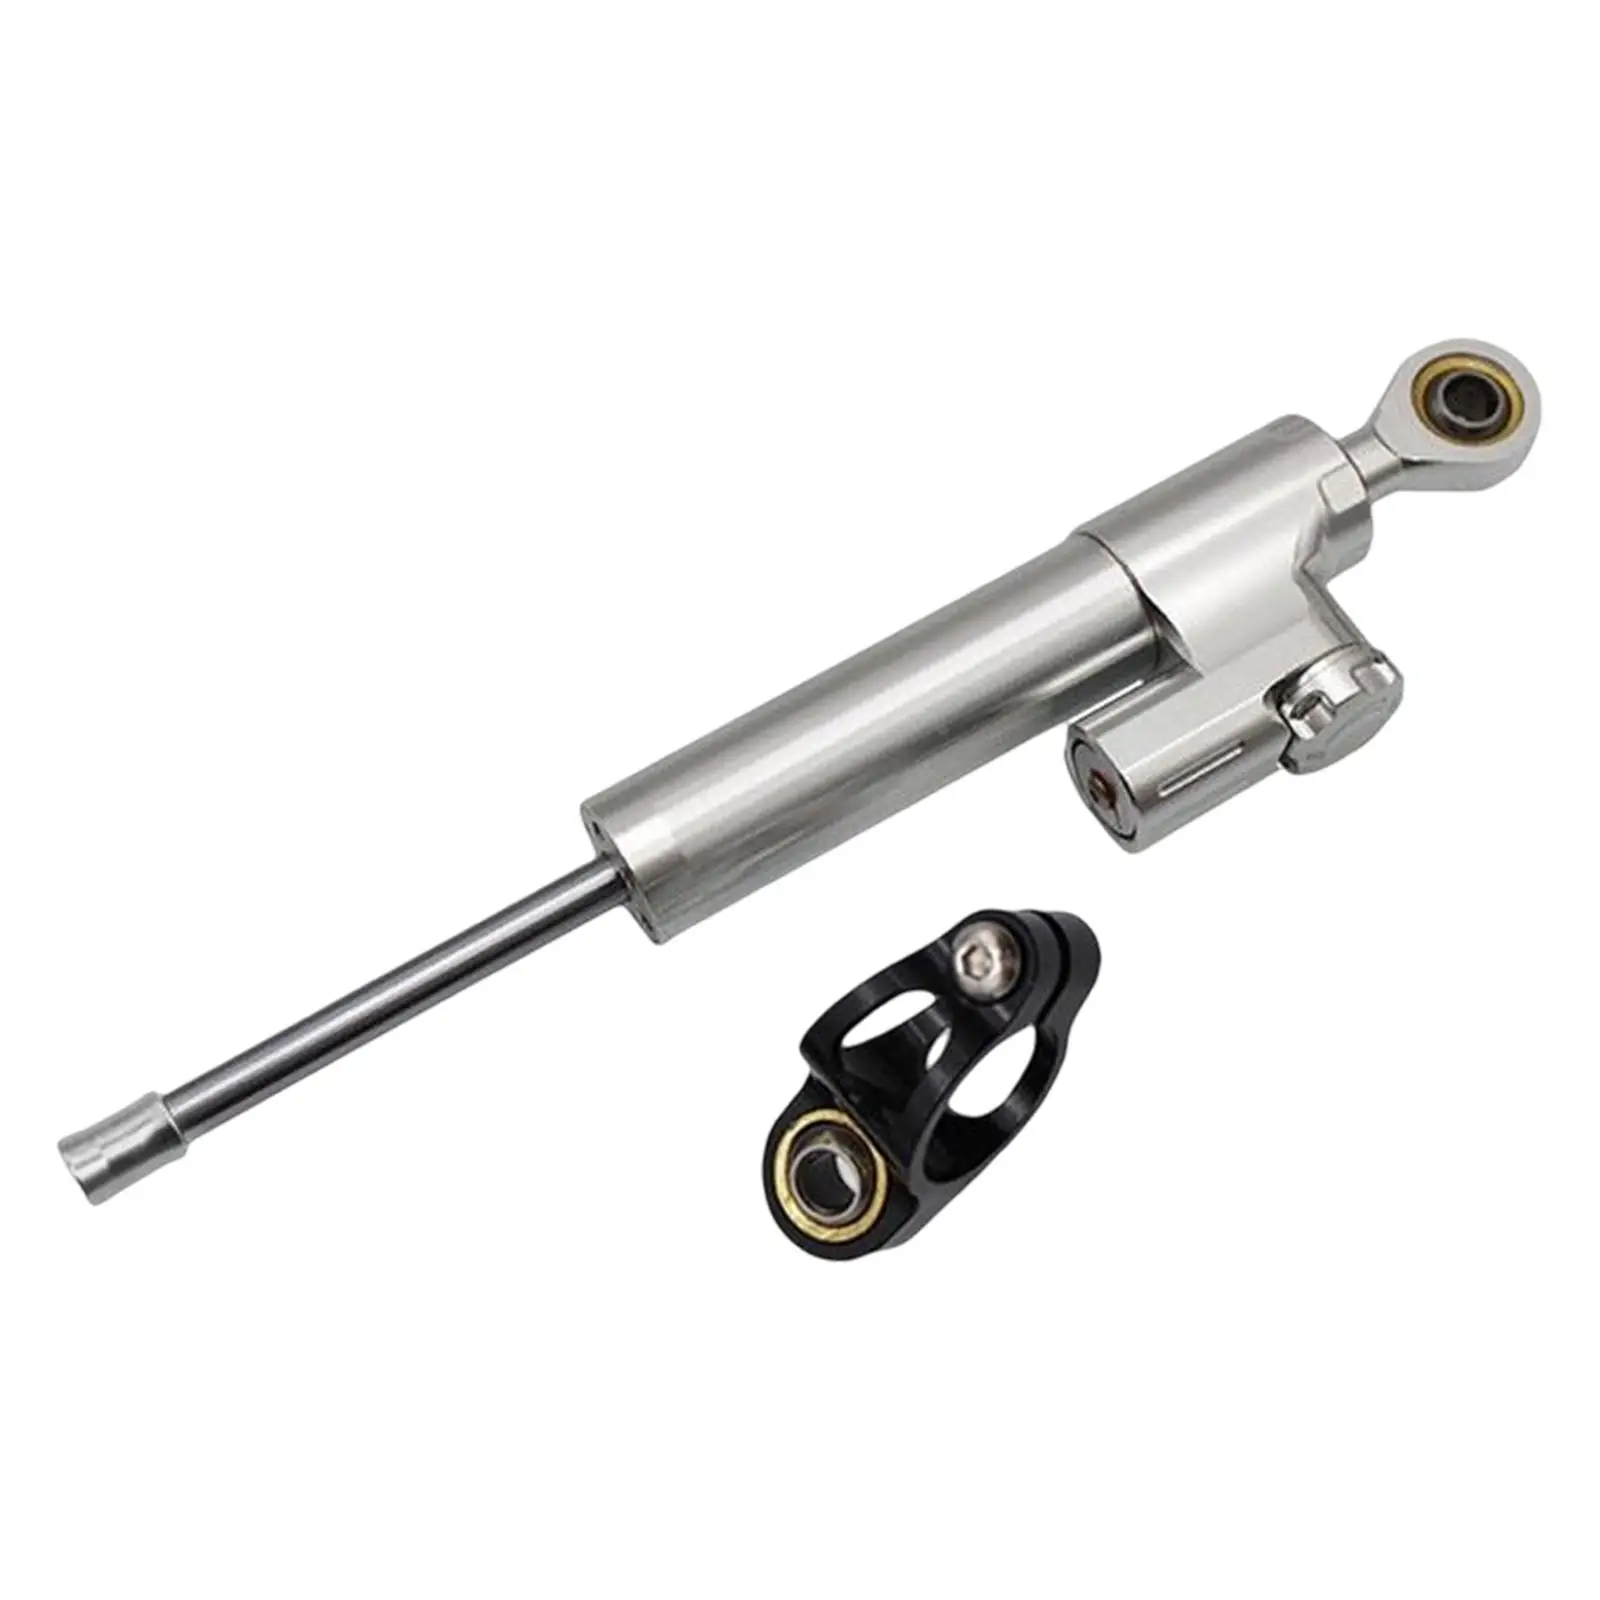 Motorcycle Steering Damper Stabilizer Aluminum Easy to Install Adjustable Fit for Motorbike Road Racing Bike Professional